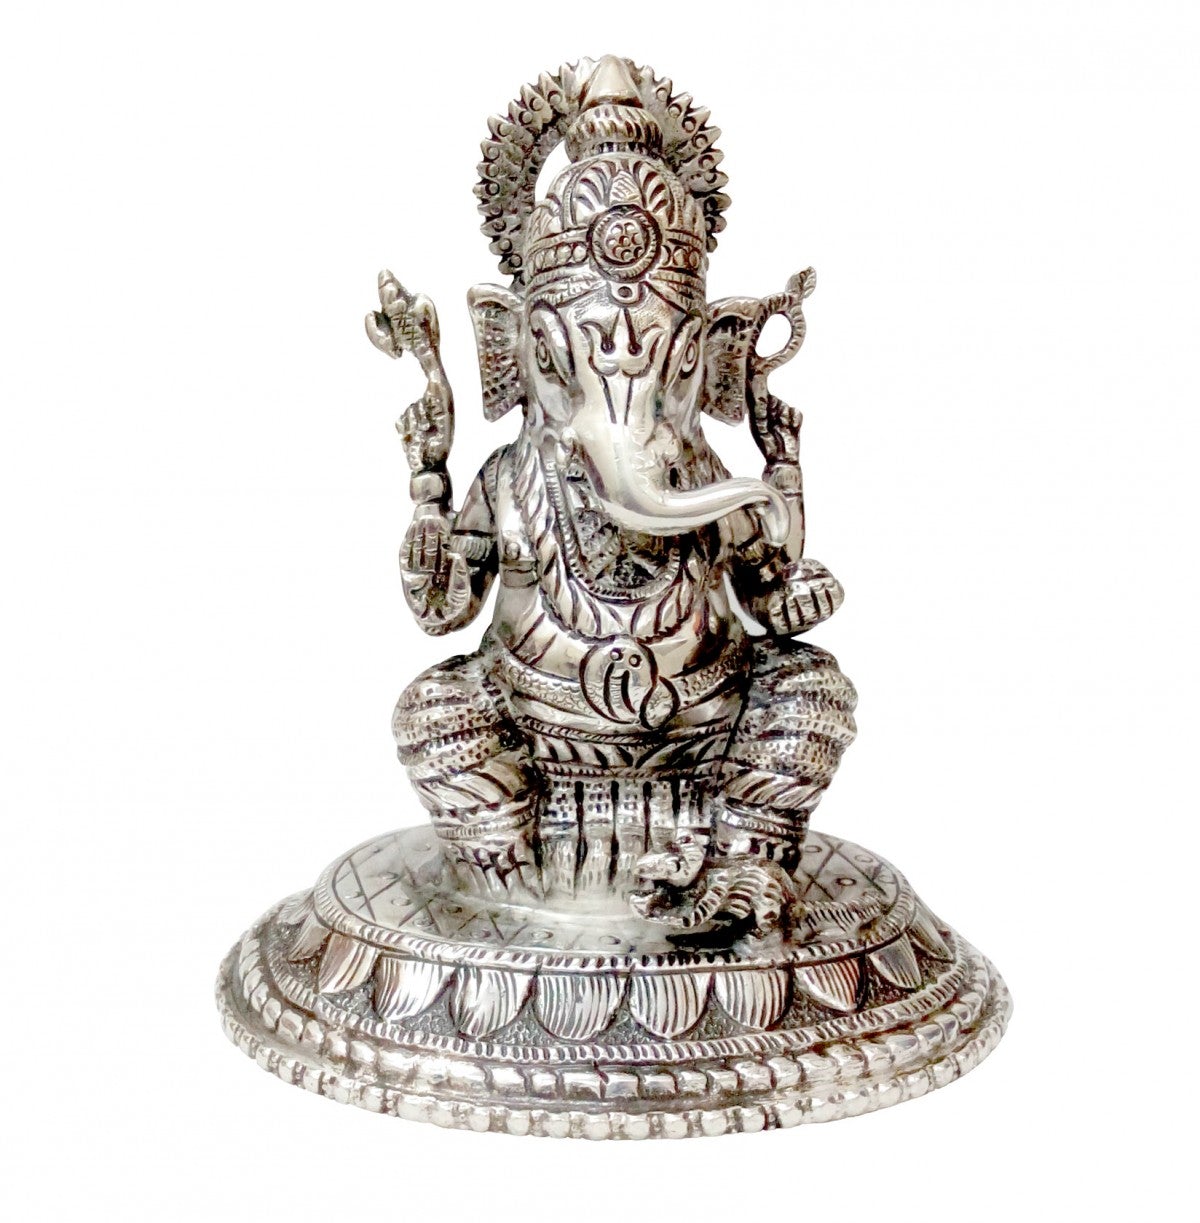 Lord Ganesha VerveJewels